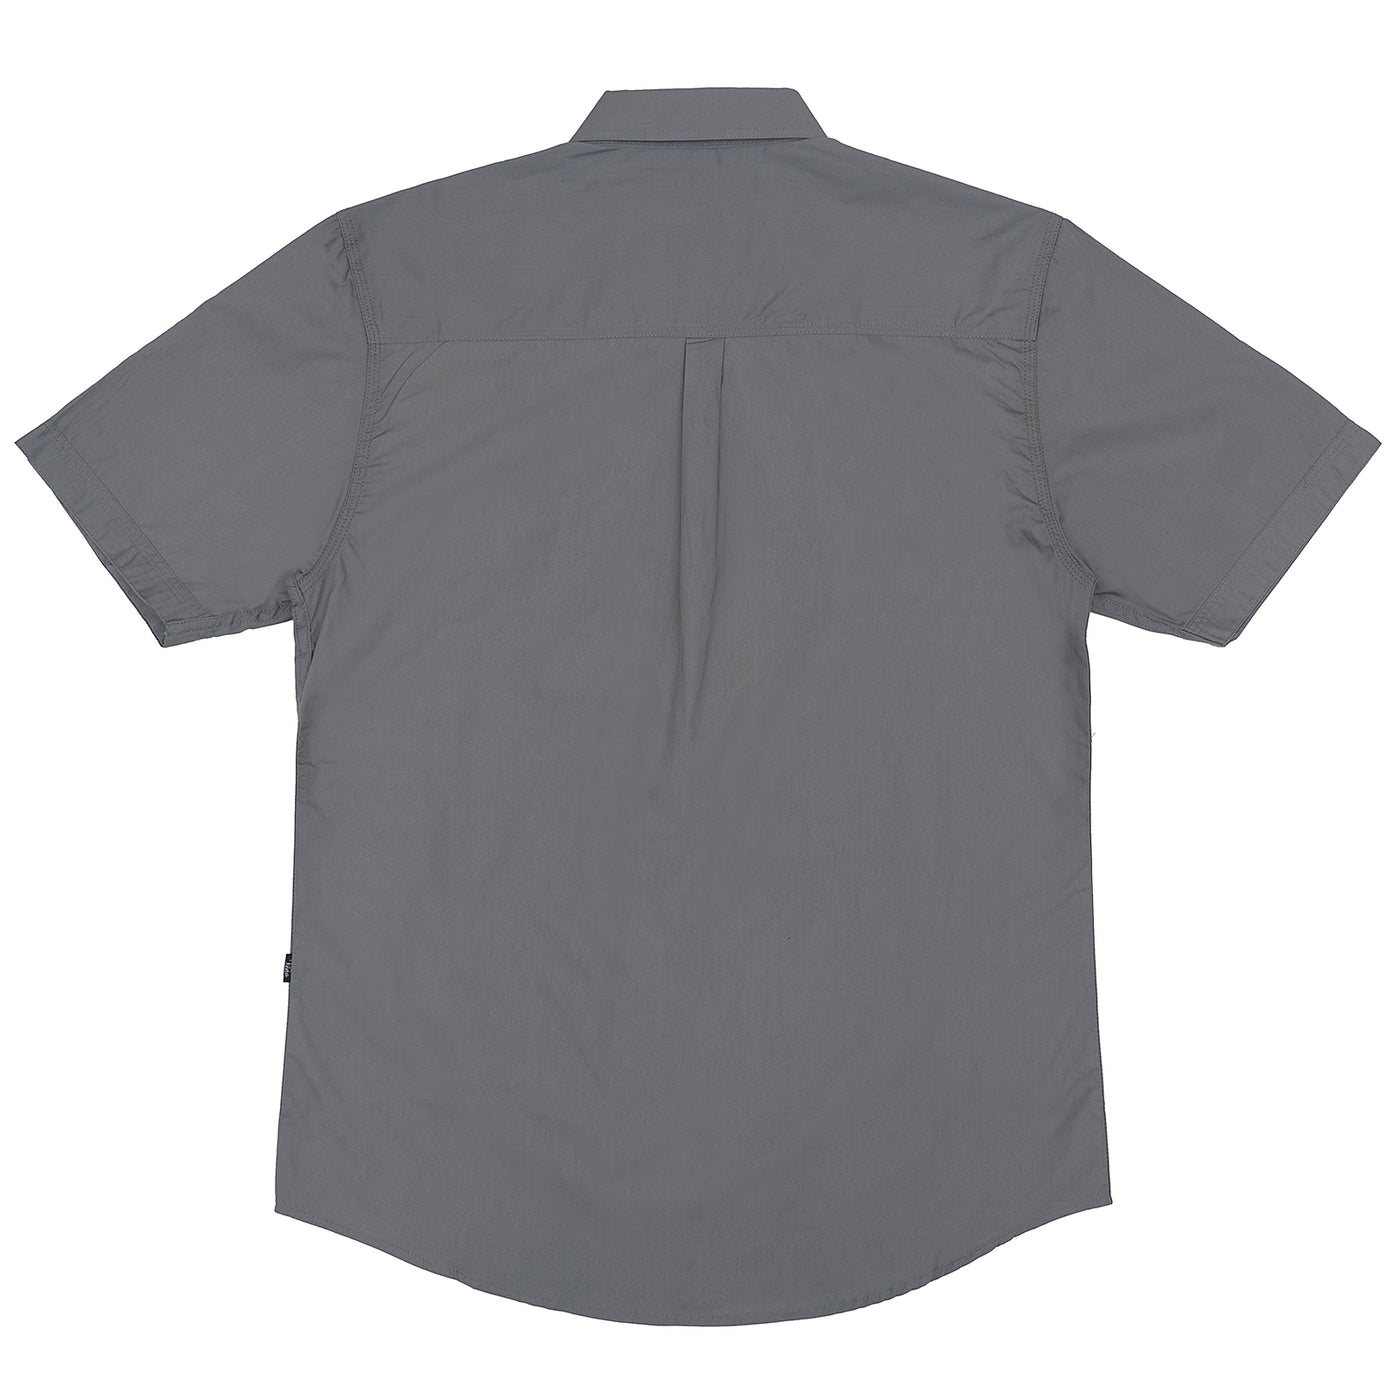 V952 Veno Cotton Button-Down Shirt - Gray